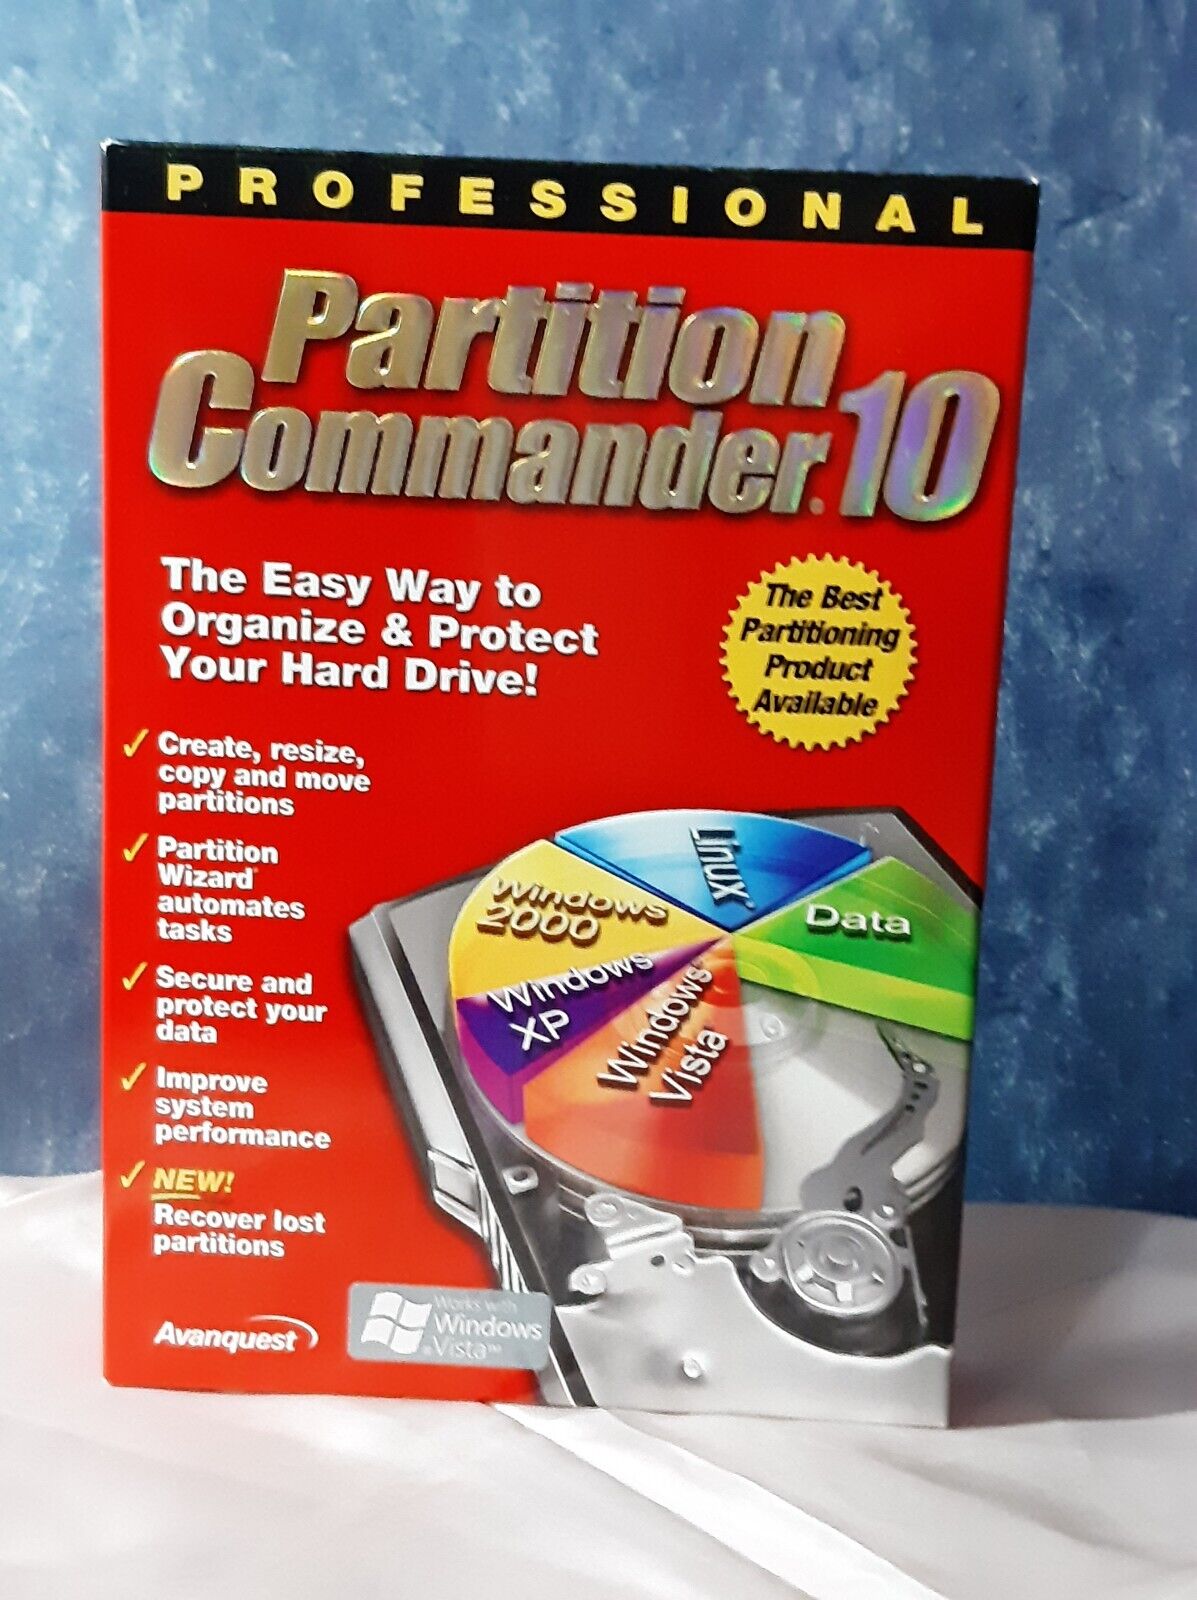 Partition Commander 10 Pro for Windows Vista, XP and 2000